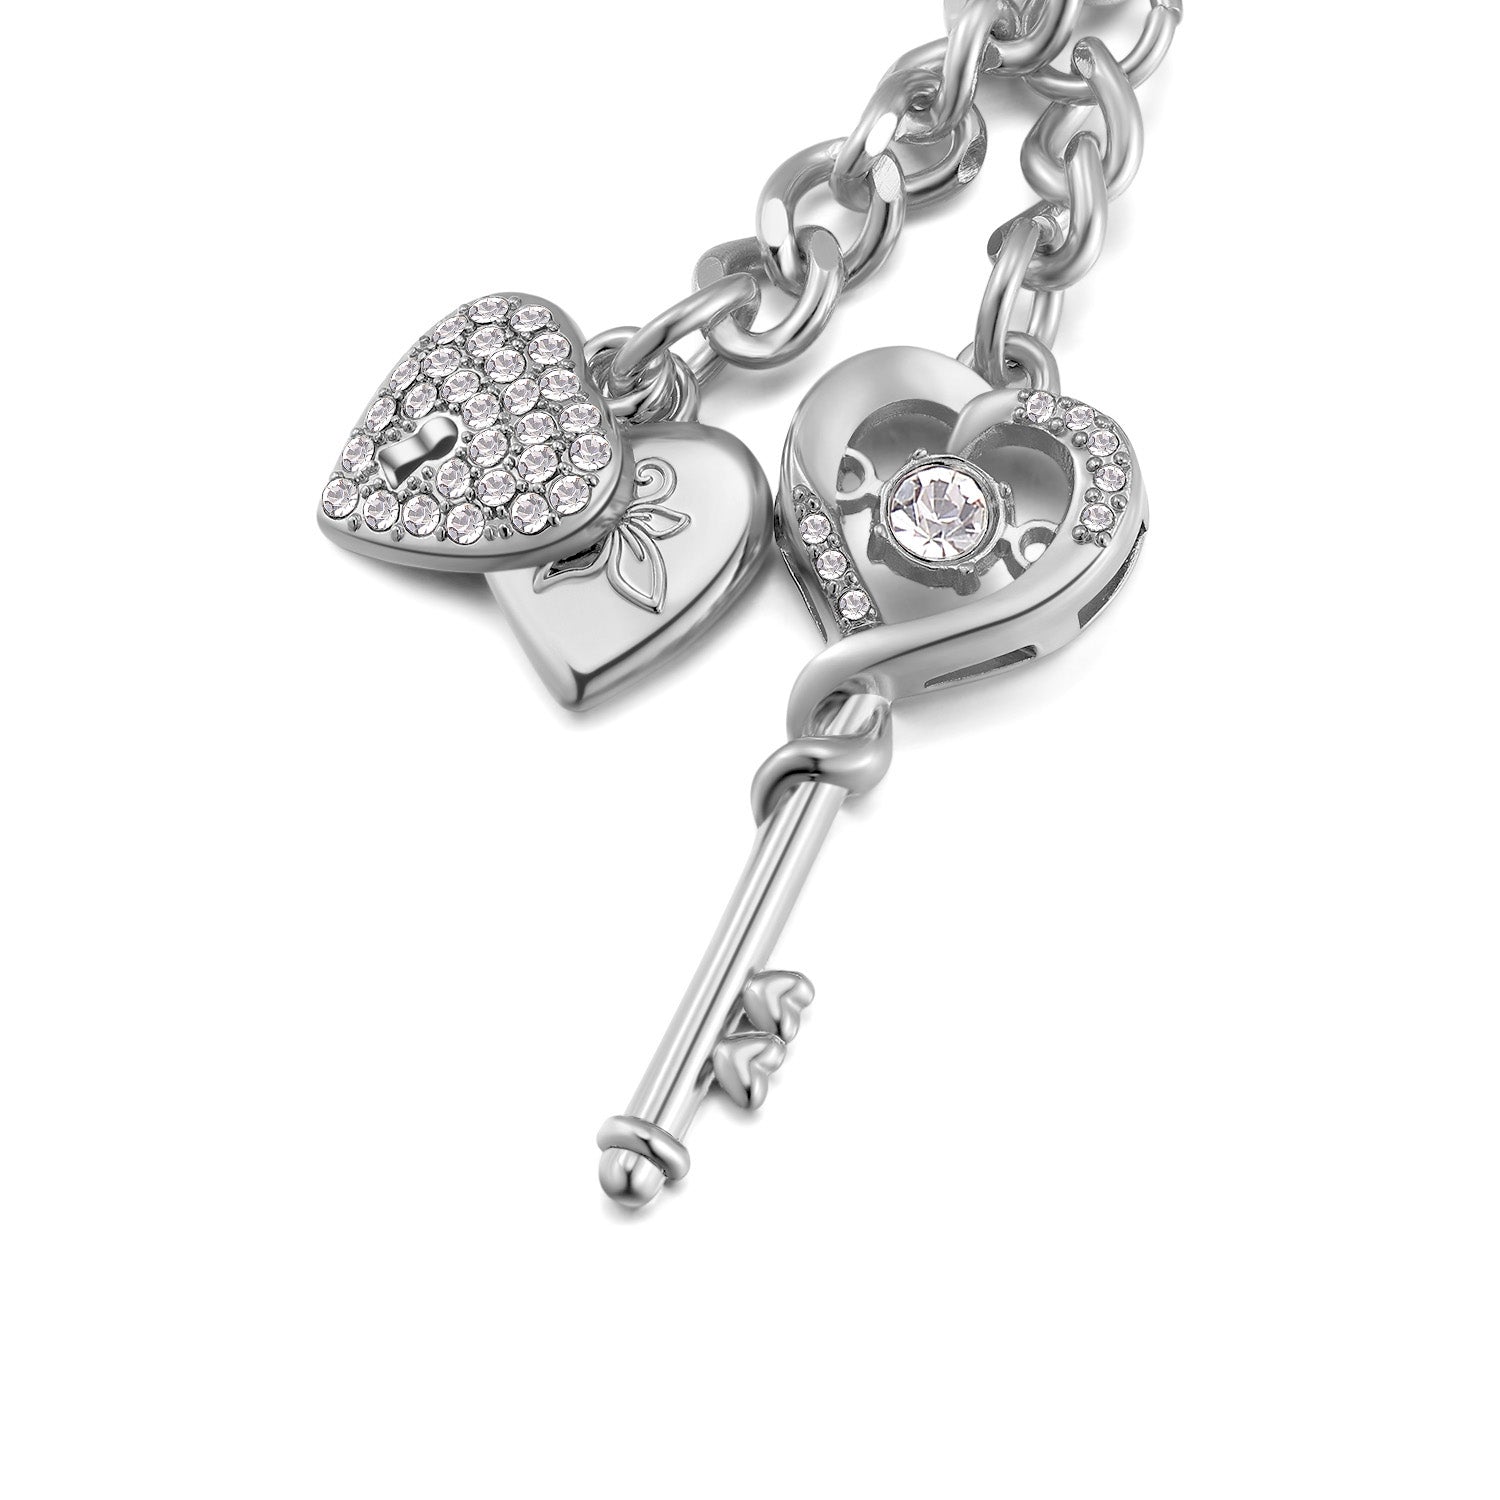 Vicacci Silver Color Heart shape keychain